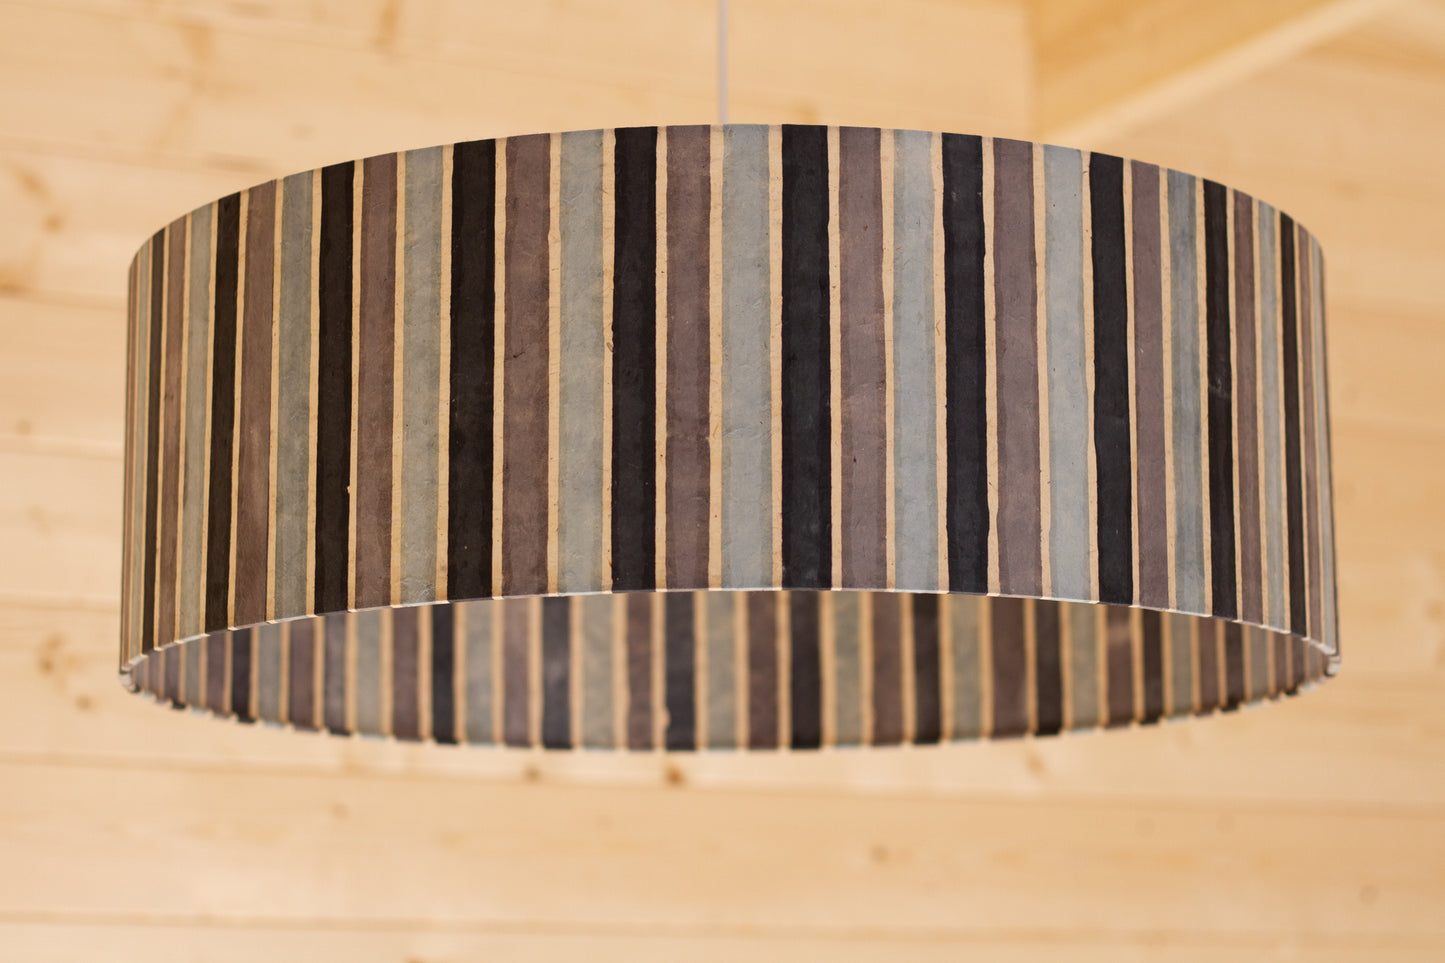 Drum Lamp Shade - P08 - Batik Stripes Grey, 60cm(d) x 20cm(h)